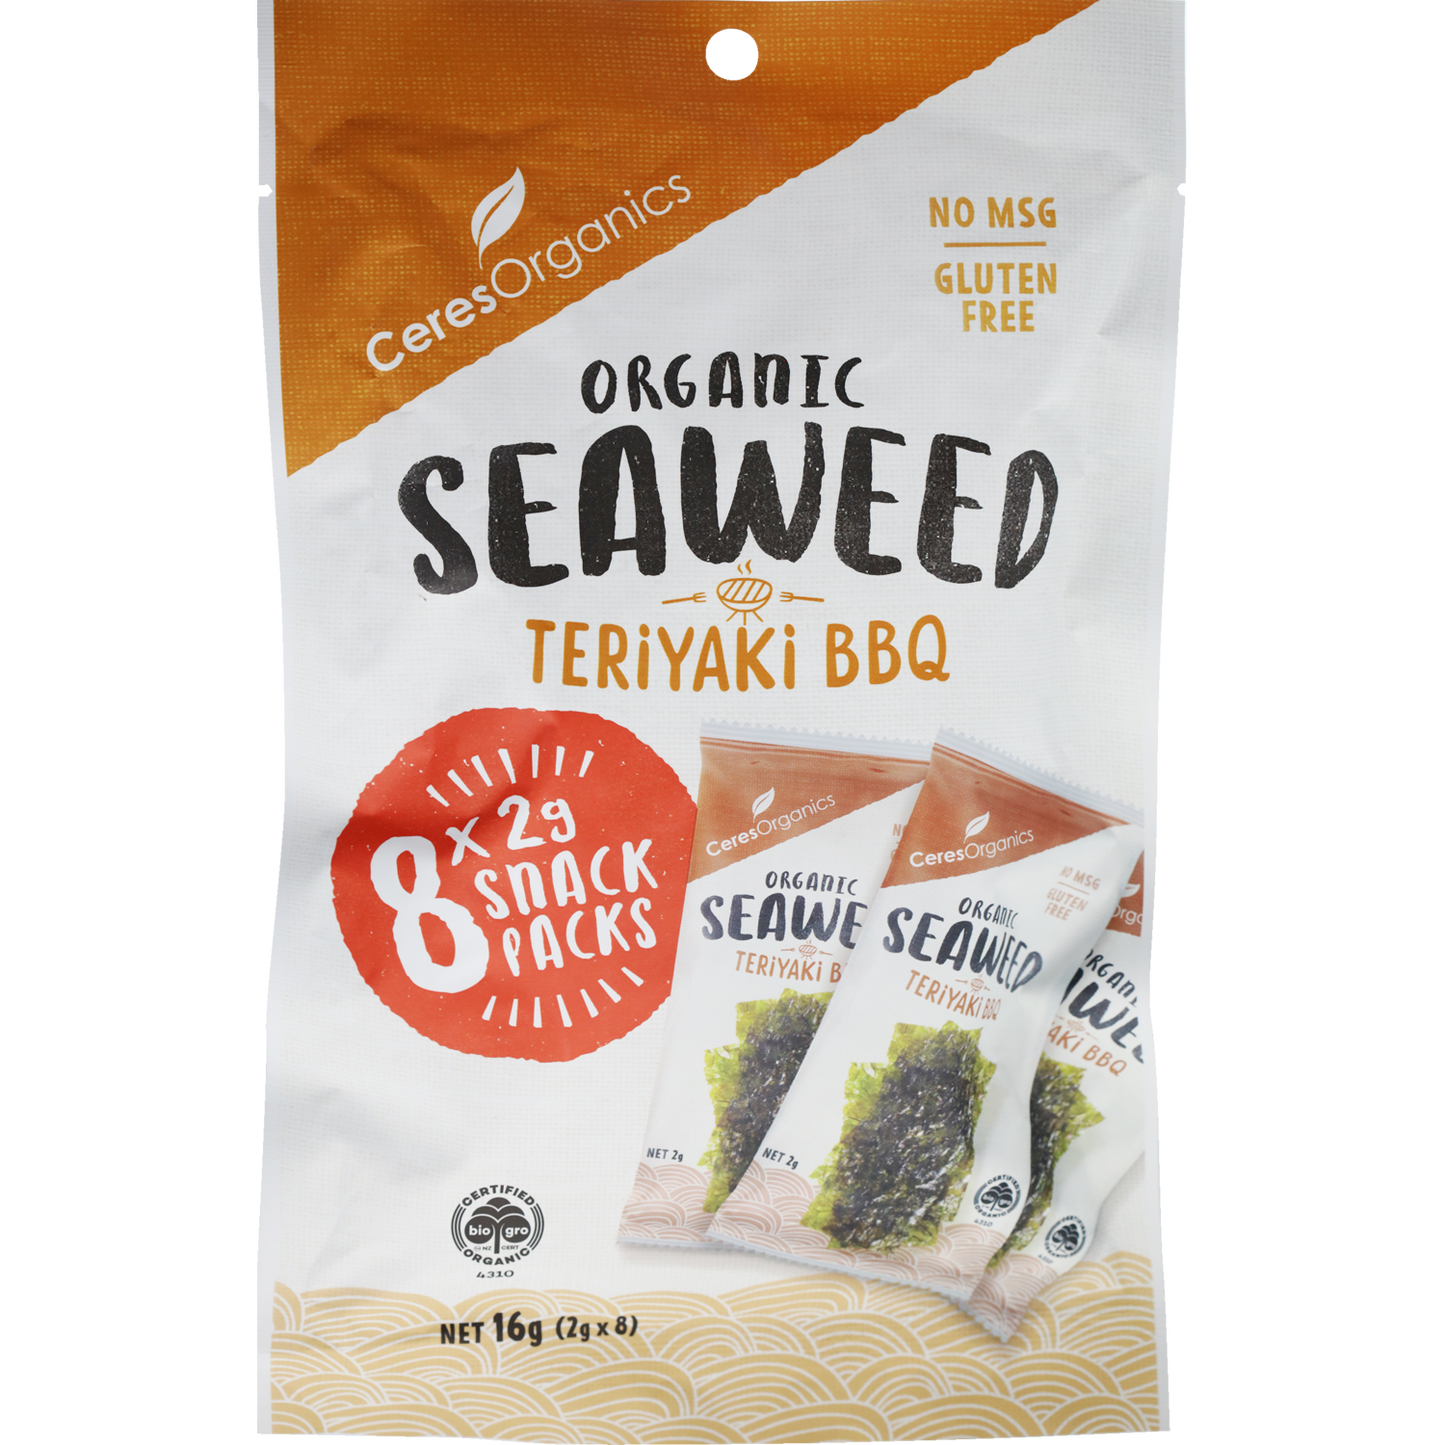 Organic Roasted Seaweed Multipack, Teriyaki BBQ Snack - 8 x 2g